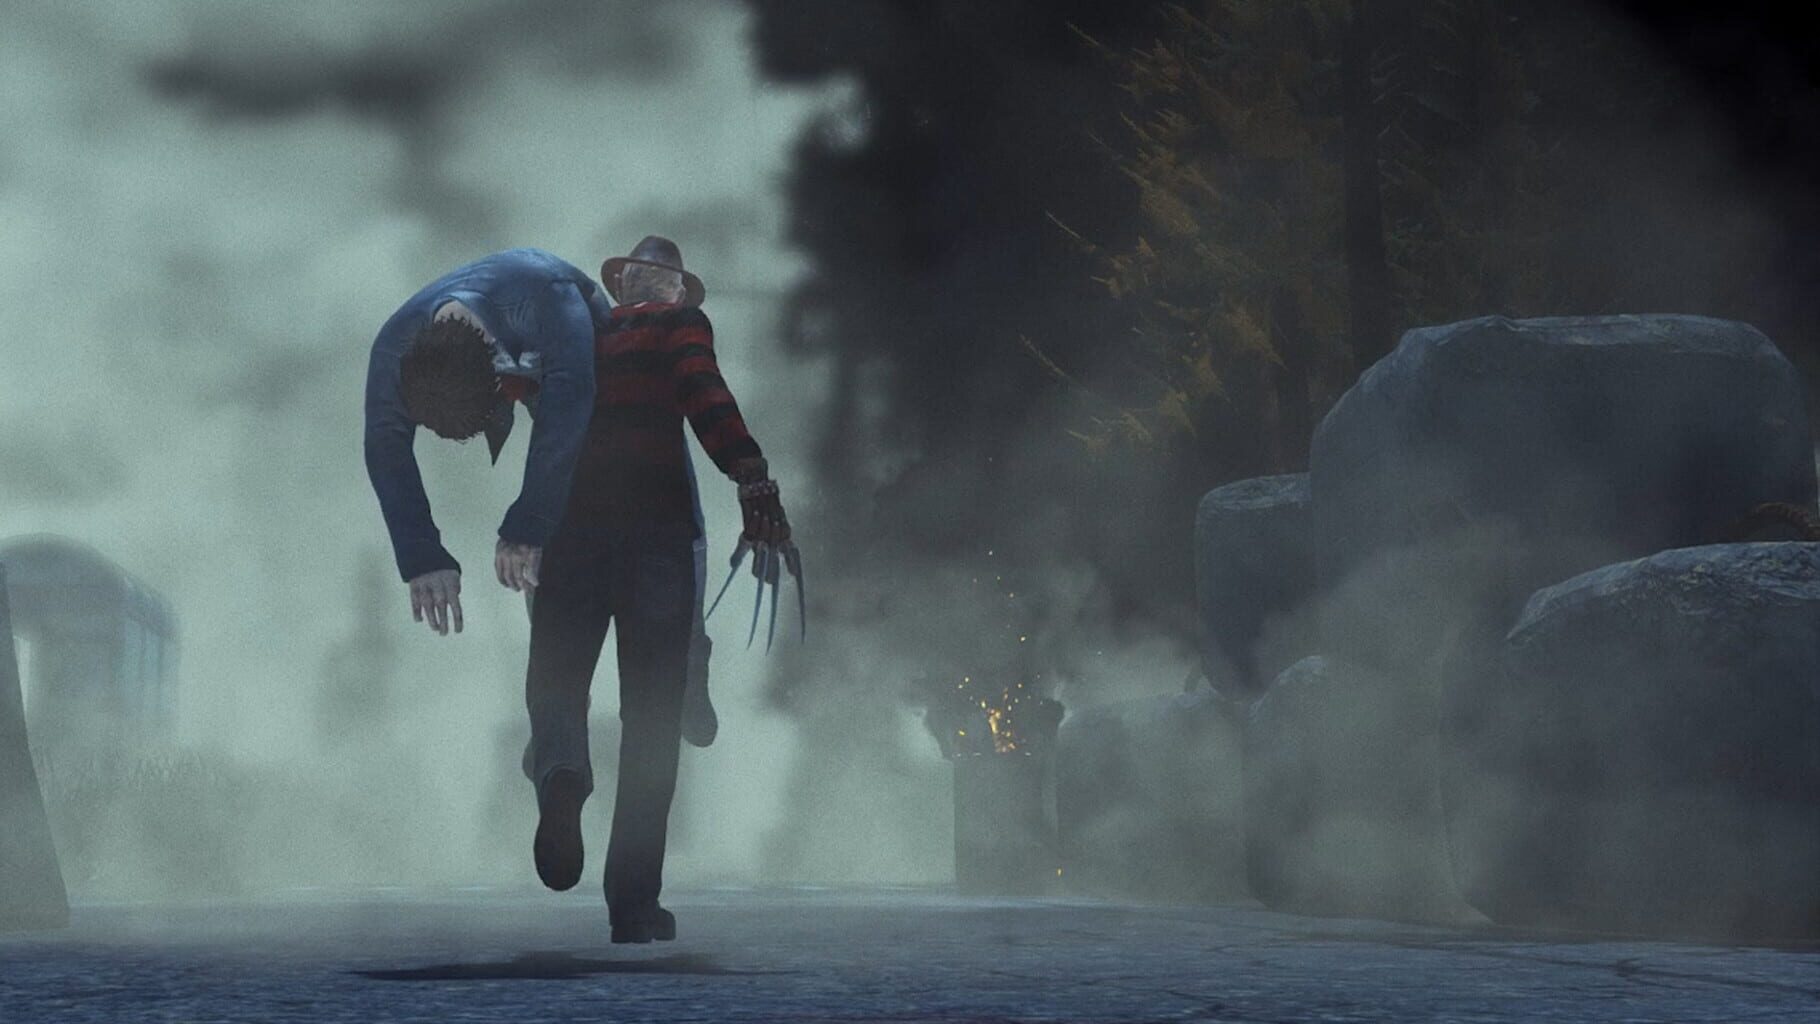 Dead by Daylight: A Nightmare on Elm Street screenshot